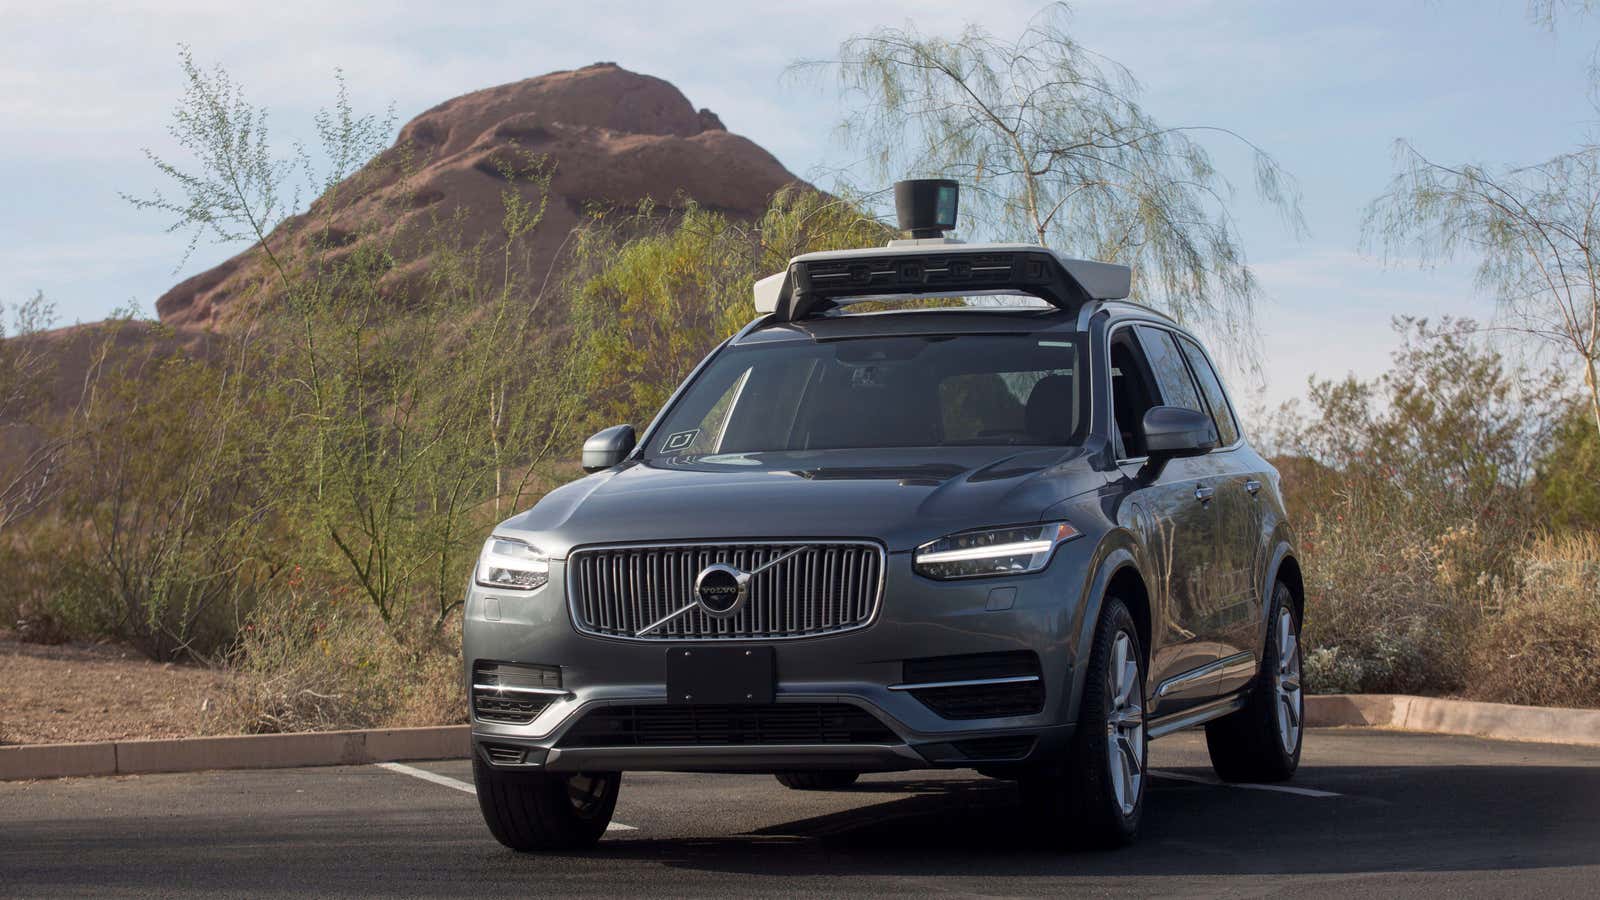 One of Uber’s self-driving vehicles in Arizona.